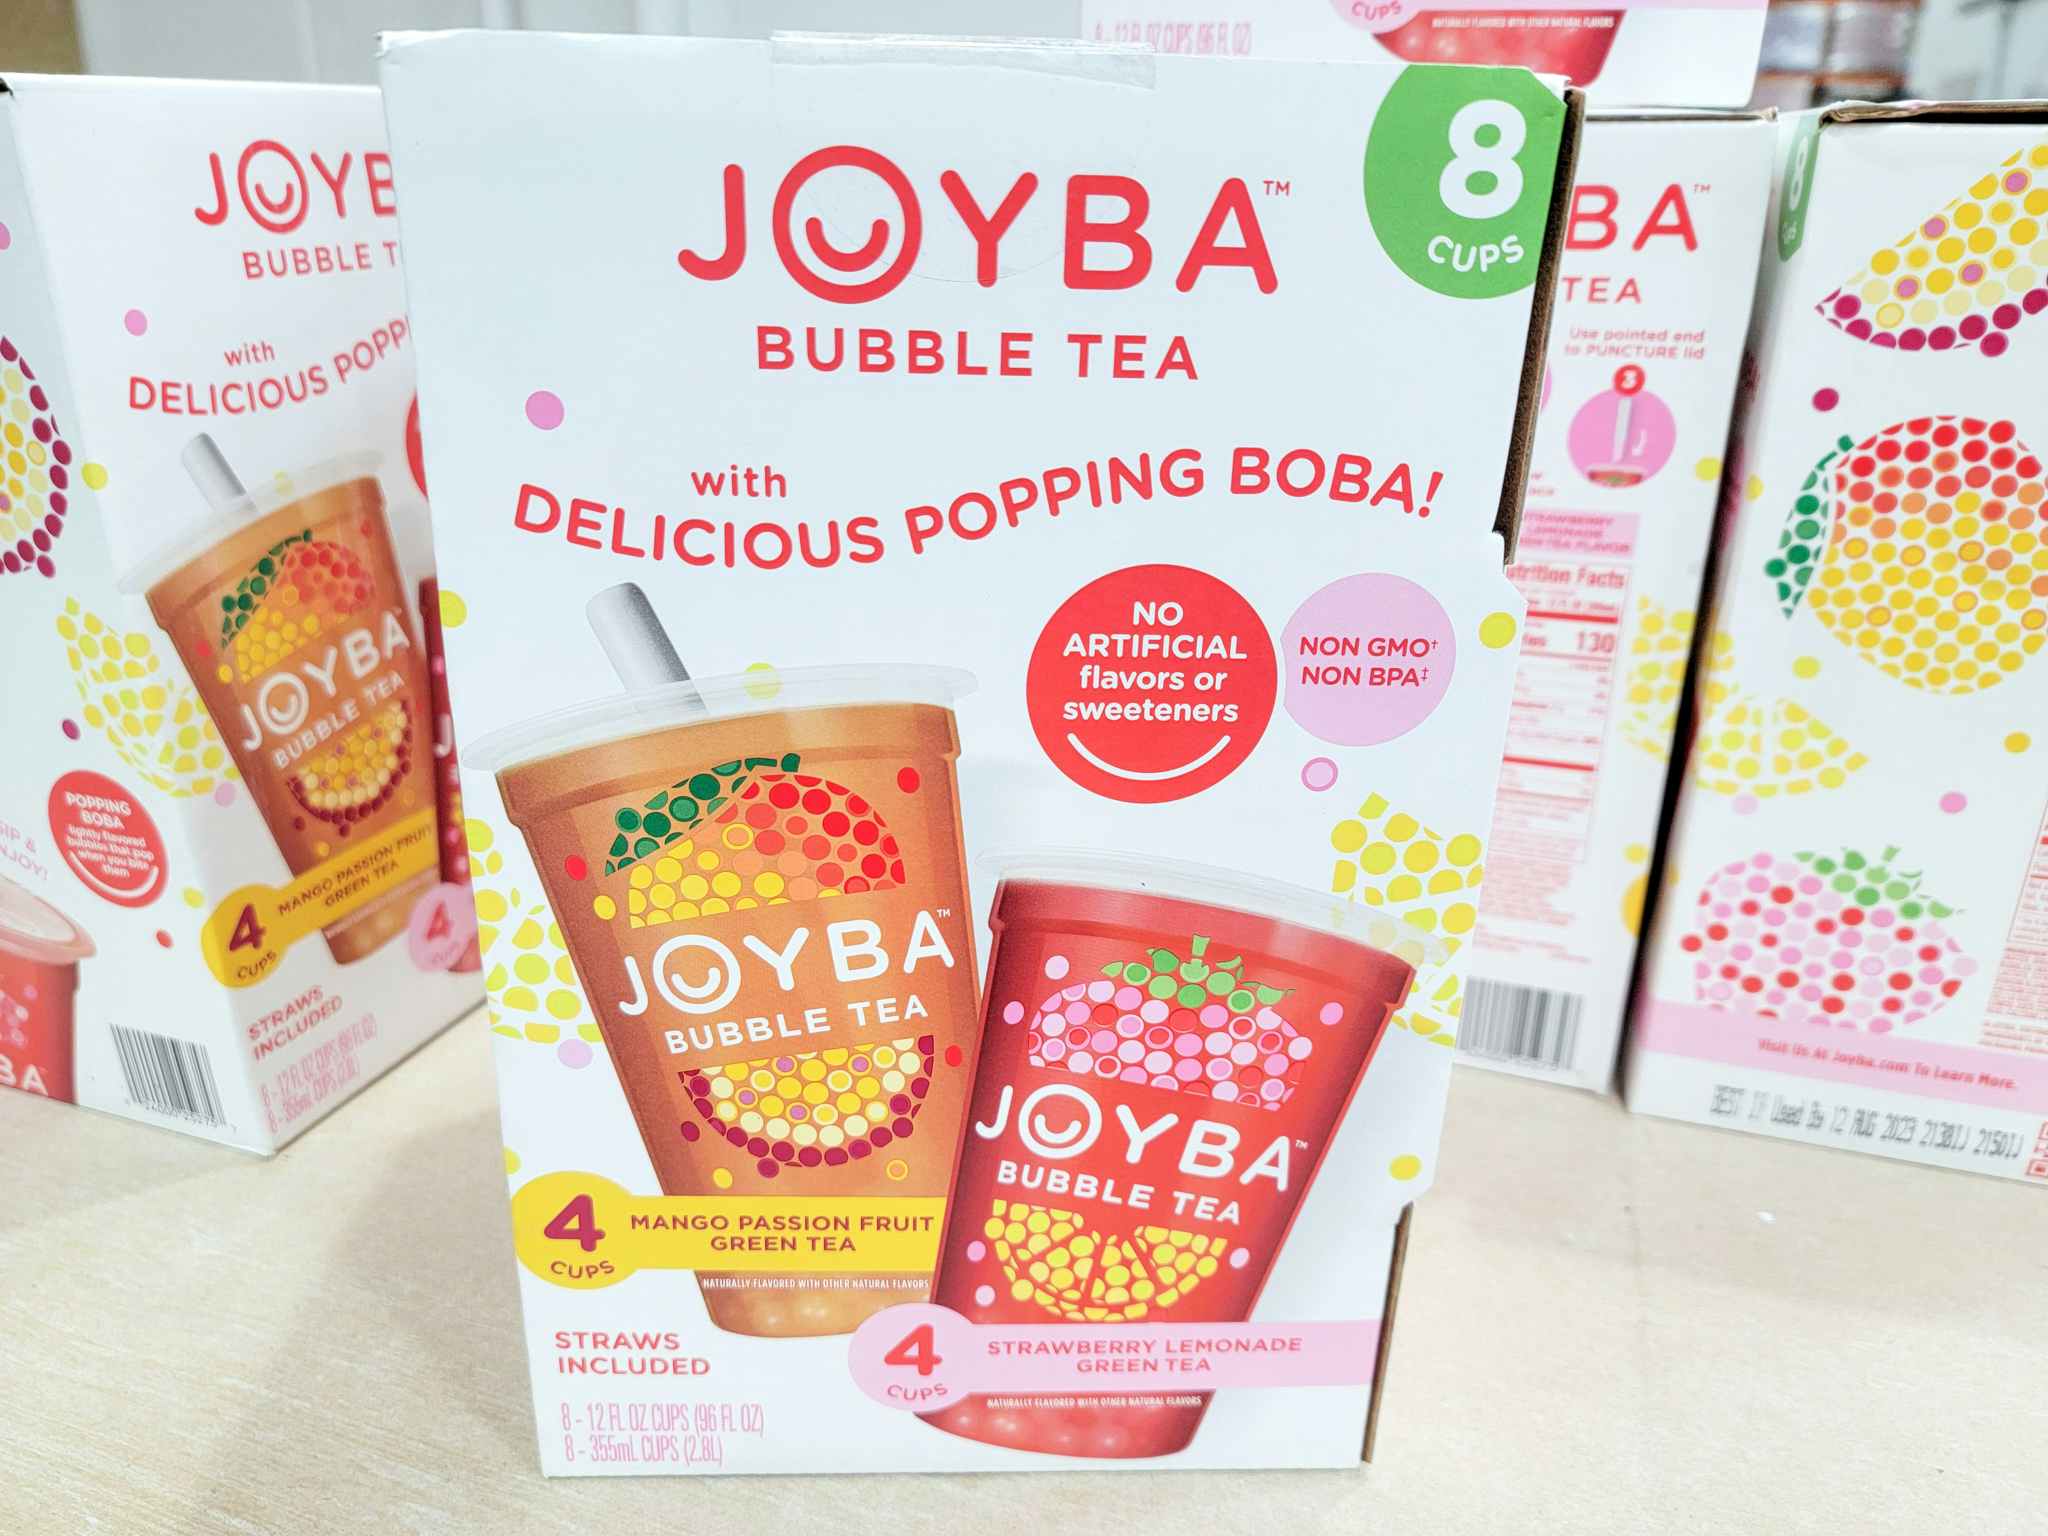 joyba popping boba bubble tea